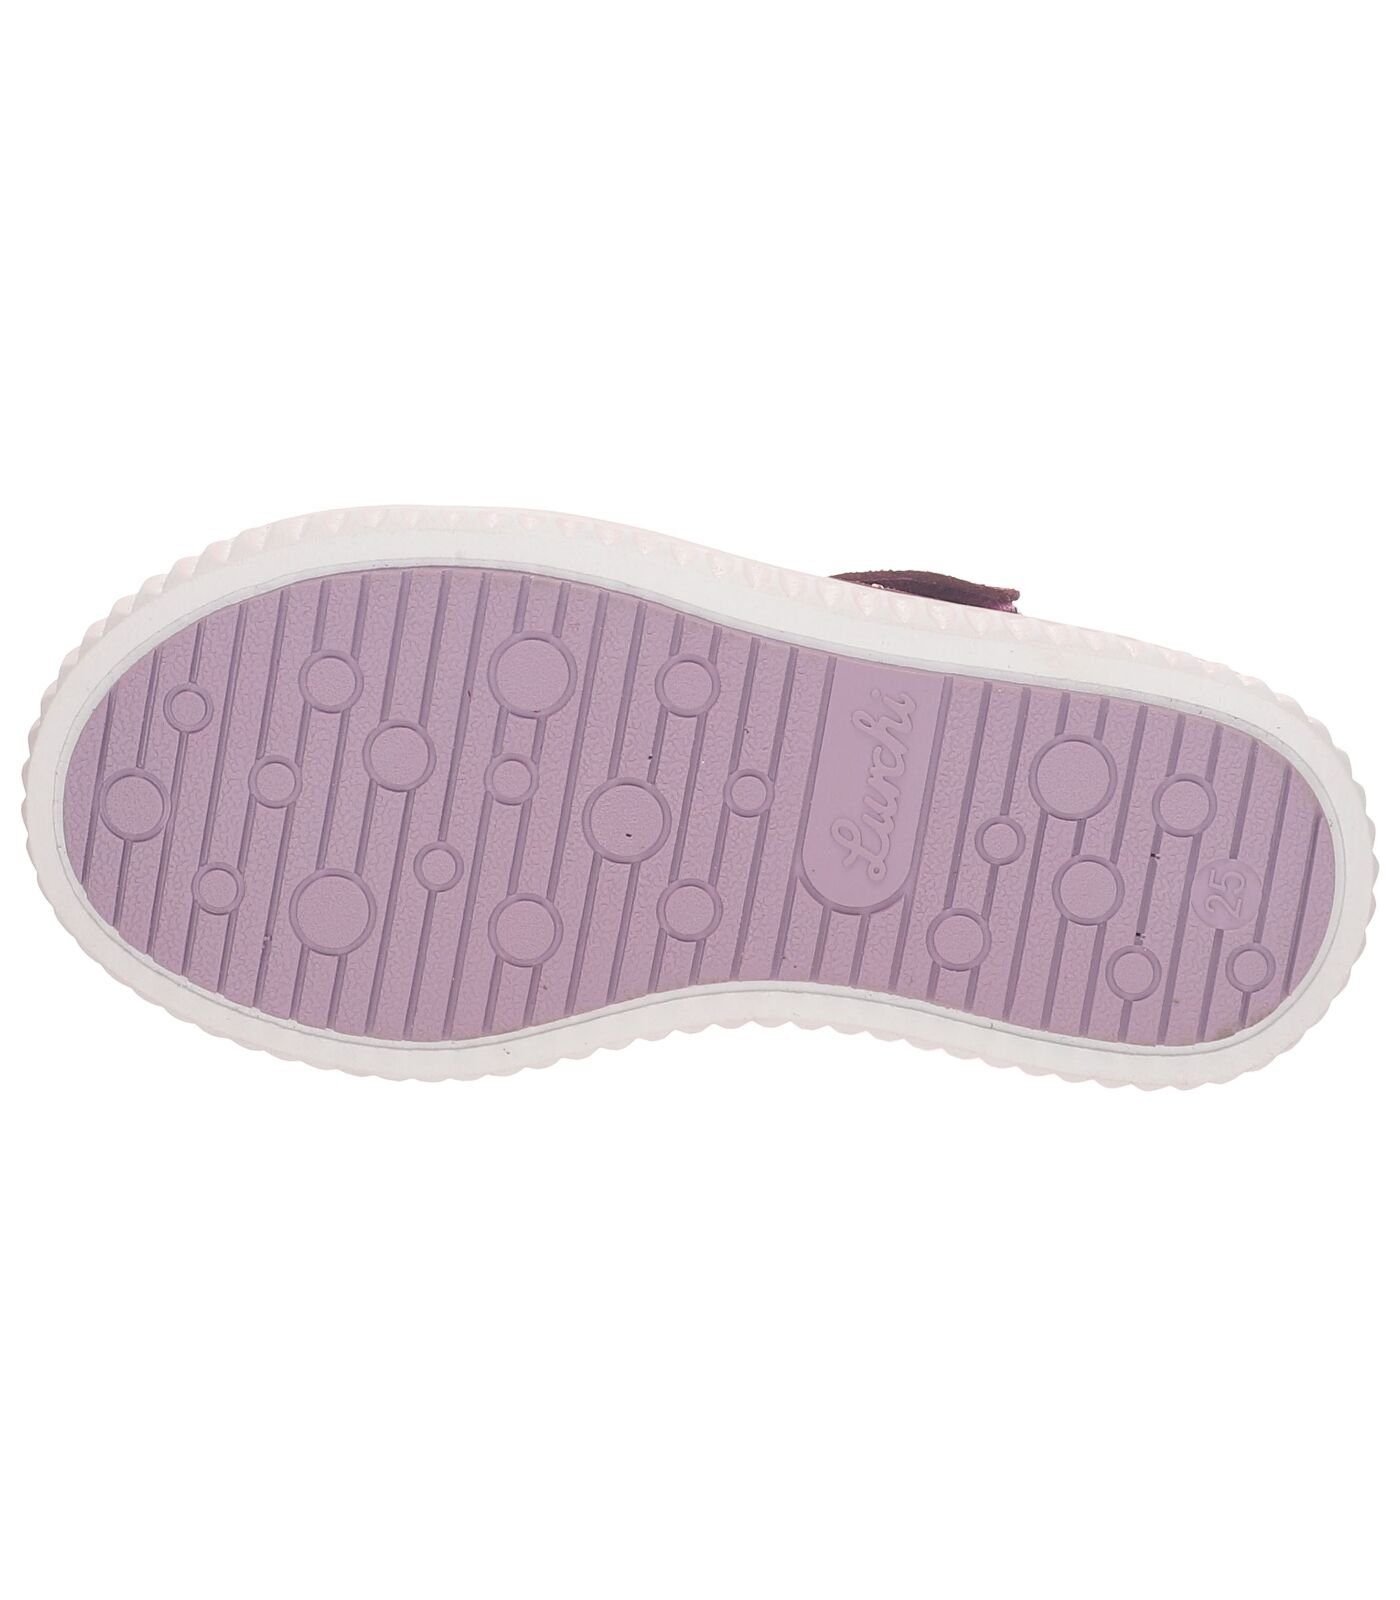 Salamander Lurchi Sneaker Veloursleder/Textil purple (19102156) Sneaker deep